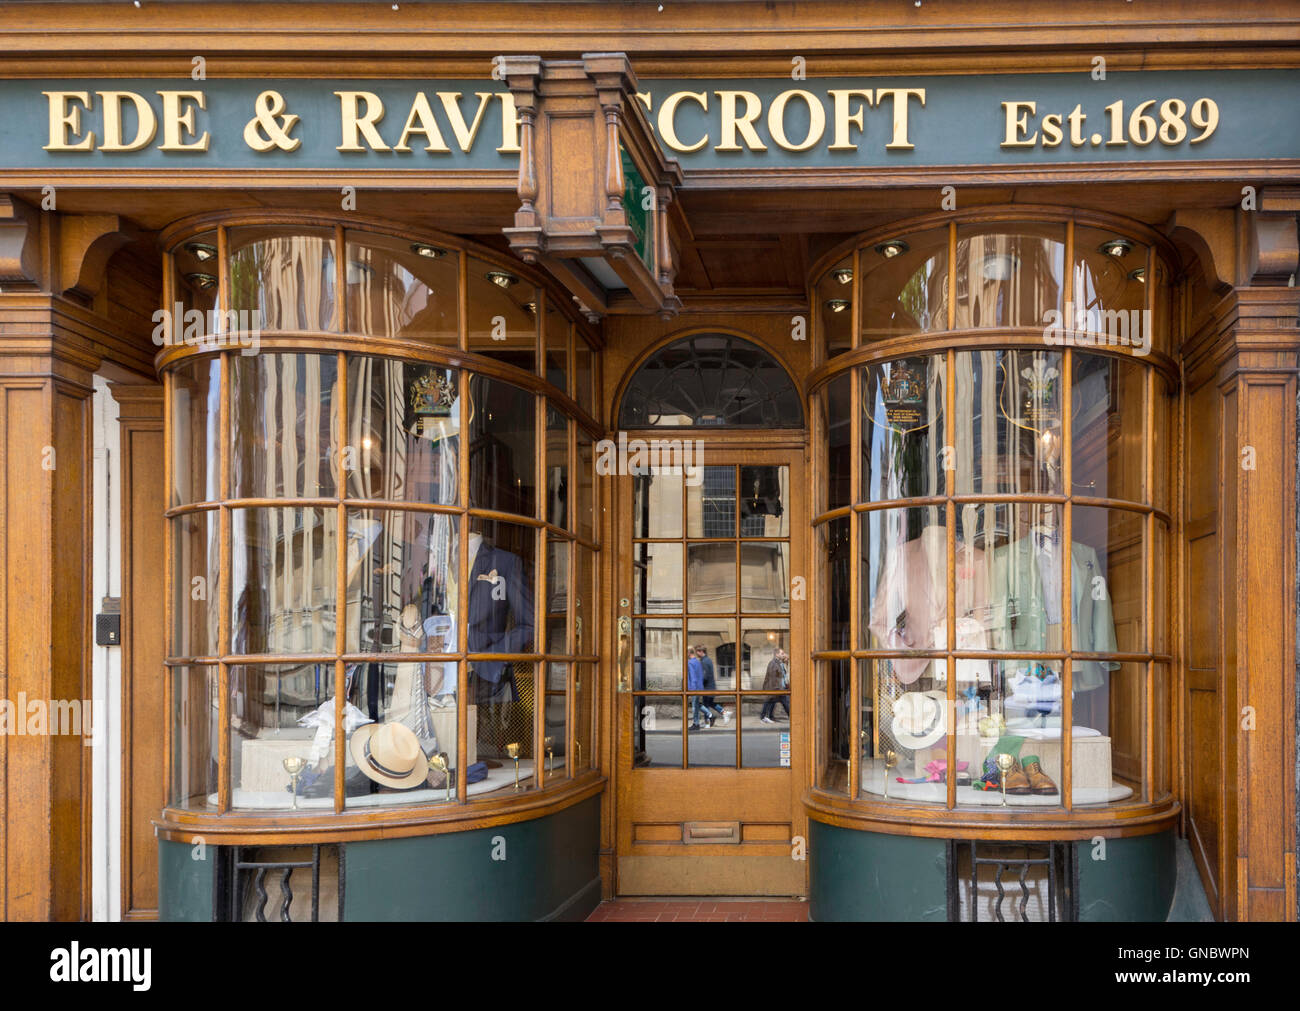 Ede & Ravenscroft historic tailors shop front, Oxford, England, UK Stock Photo